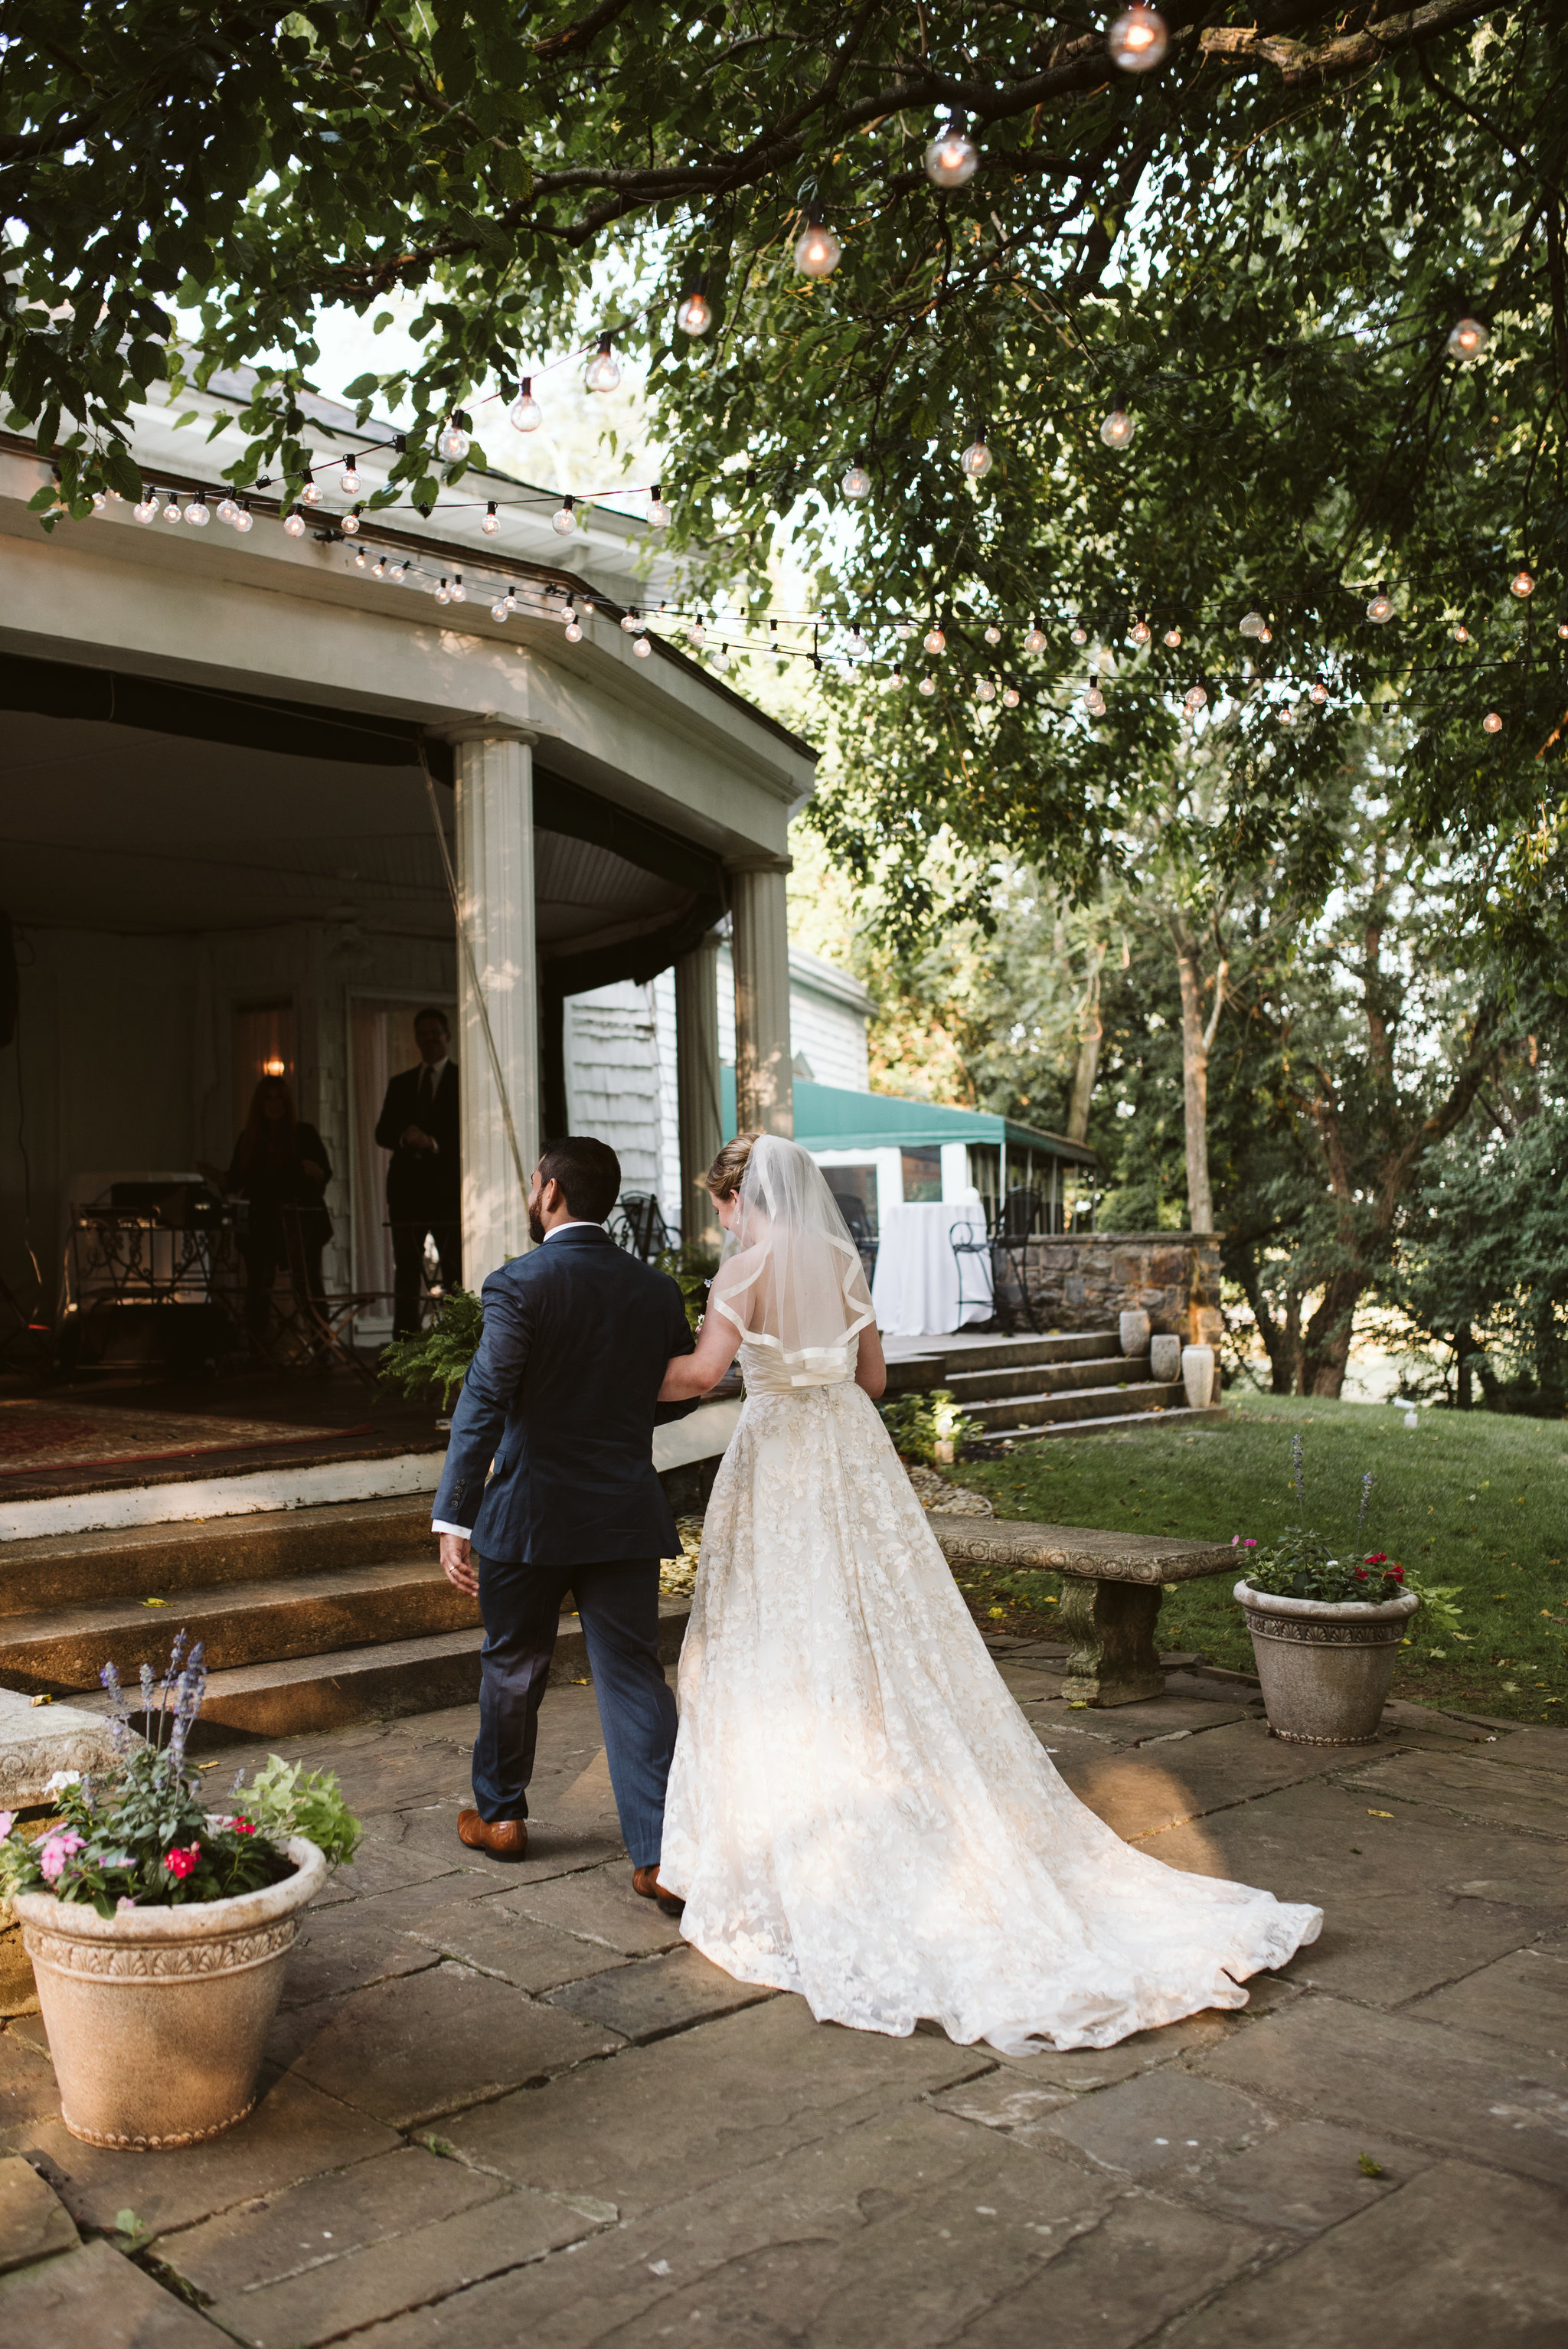  Ellicott City, Baltimore Wedding Photographer, Wayside Inn, Summer Wedding, Romantic, Traditional, Bride and Groom Walking into Manor House, Short Veil 